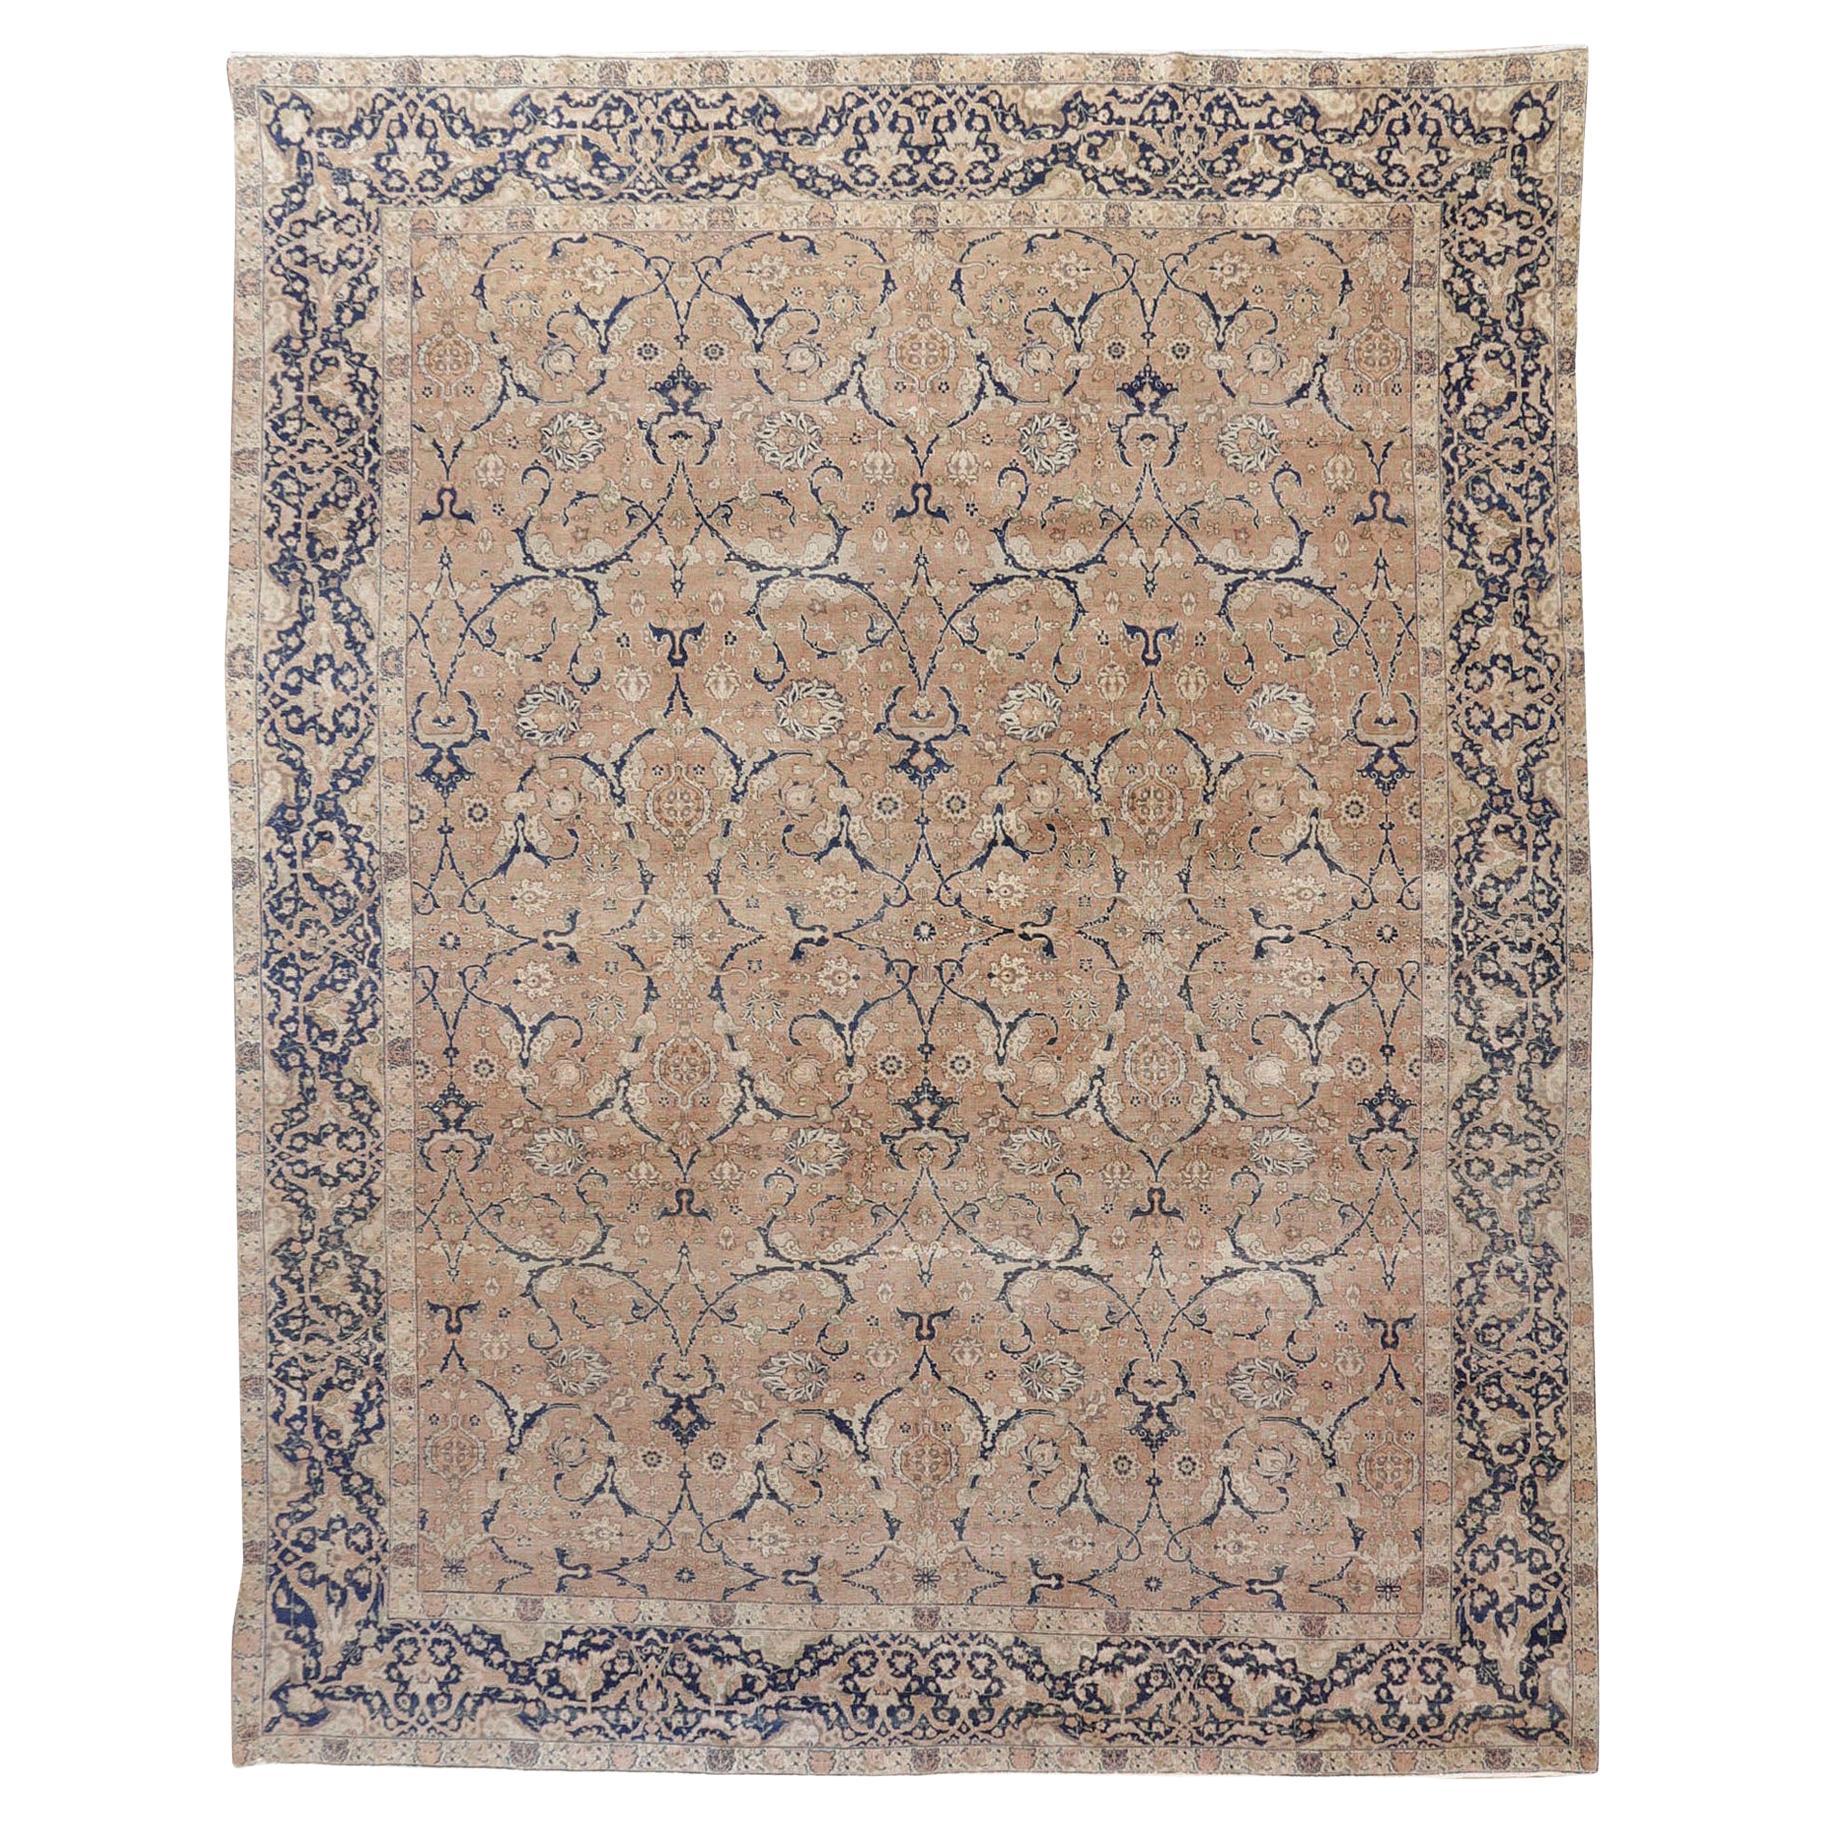 Antique Persian Tabriz Rug Carpet, circa 1900  9' x 11'3